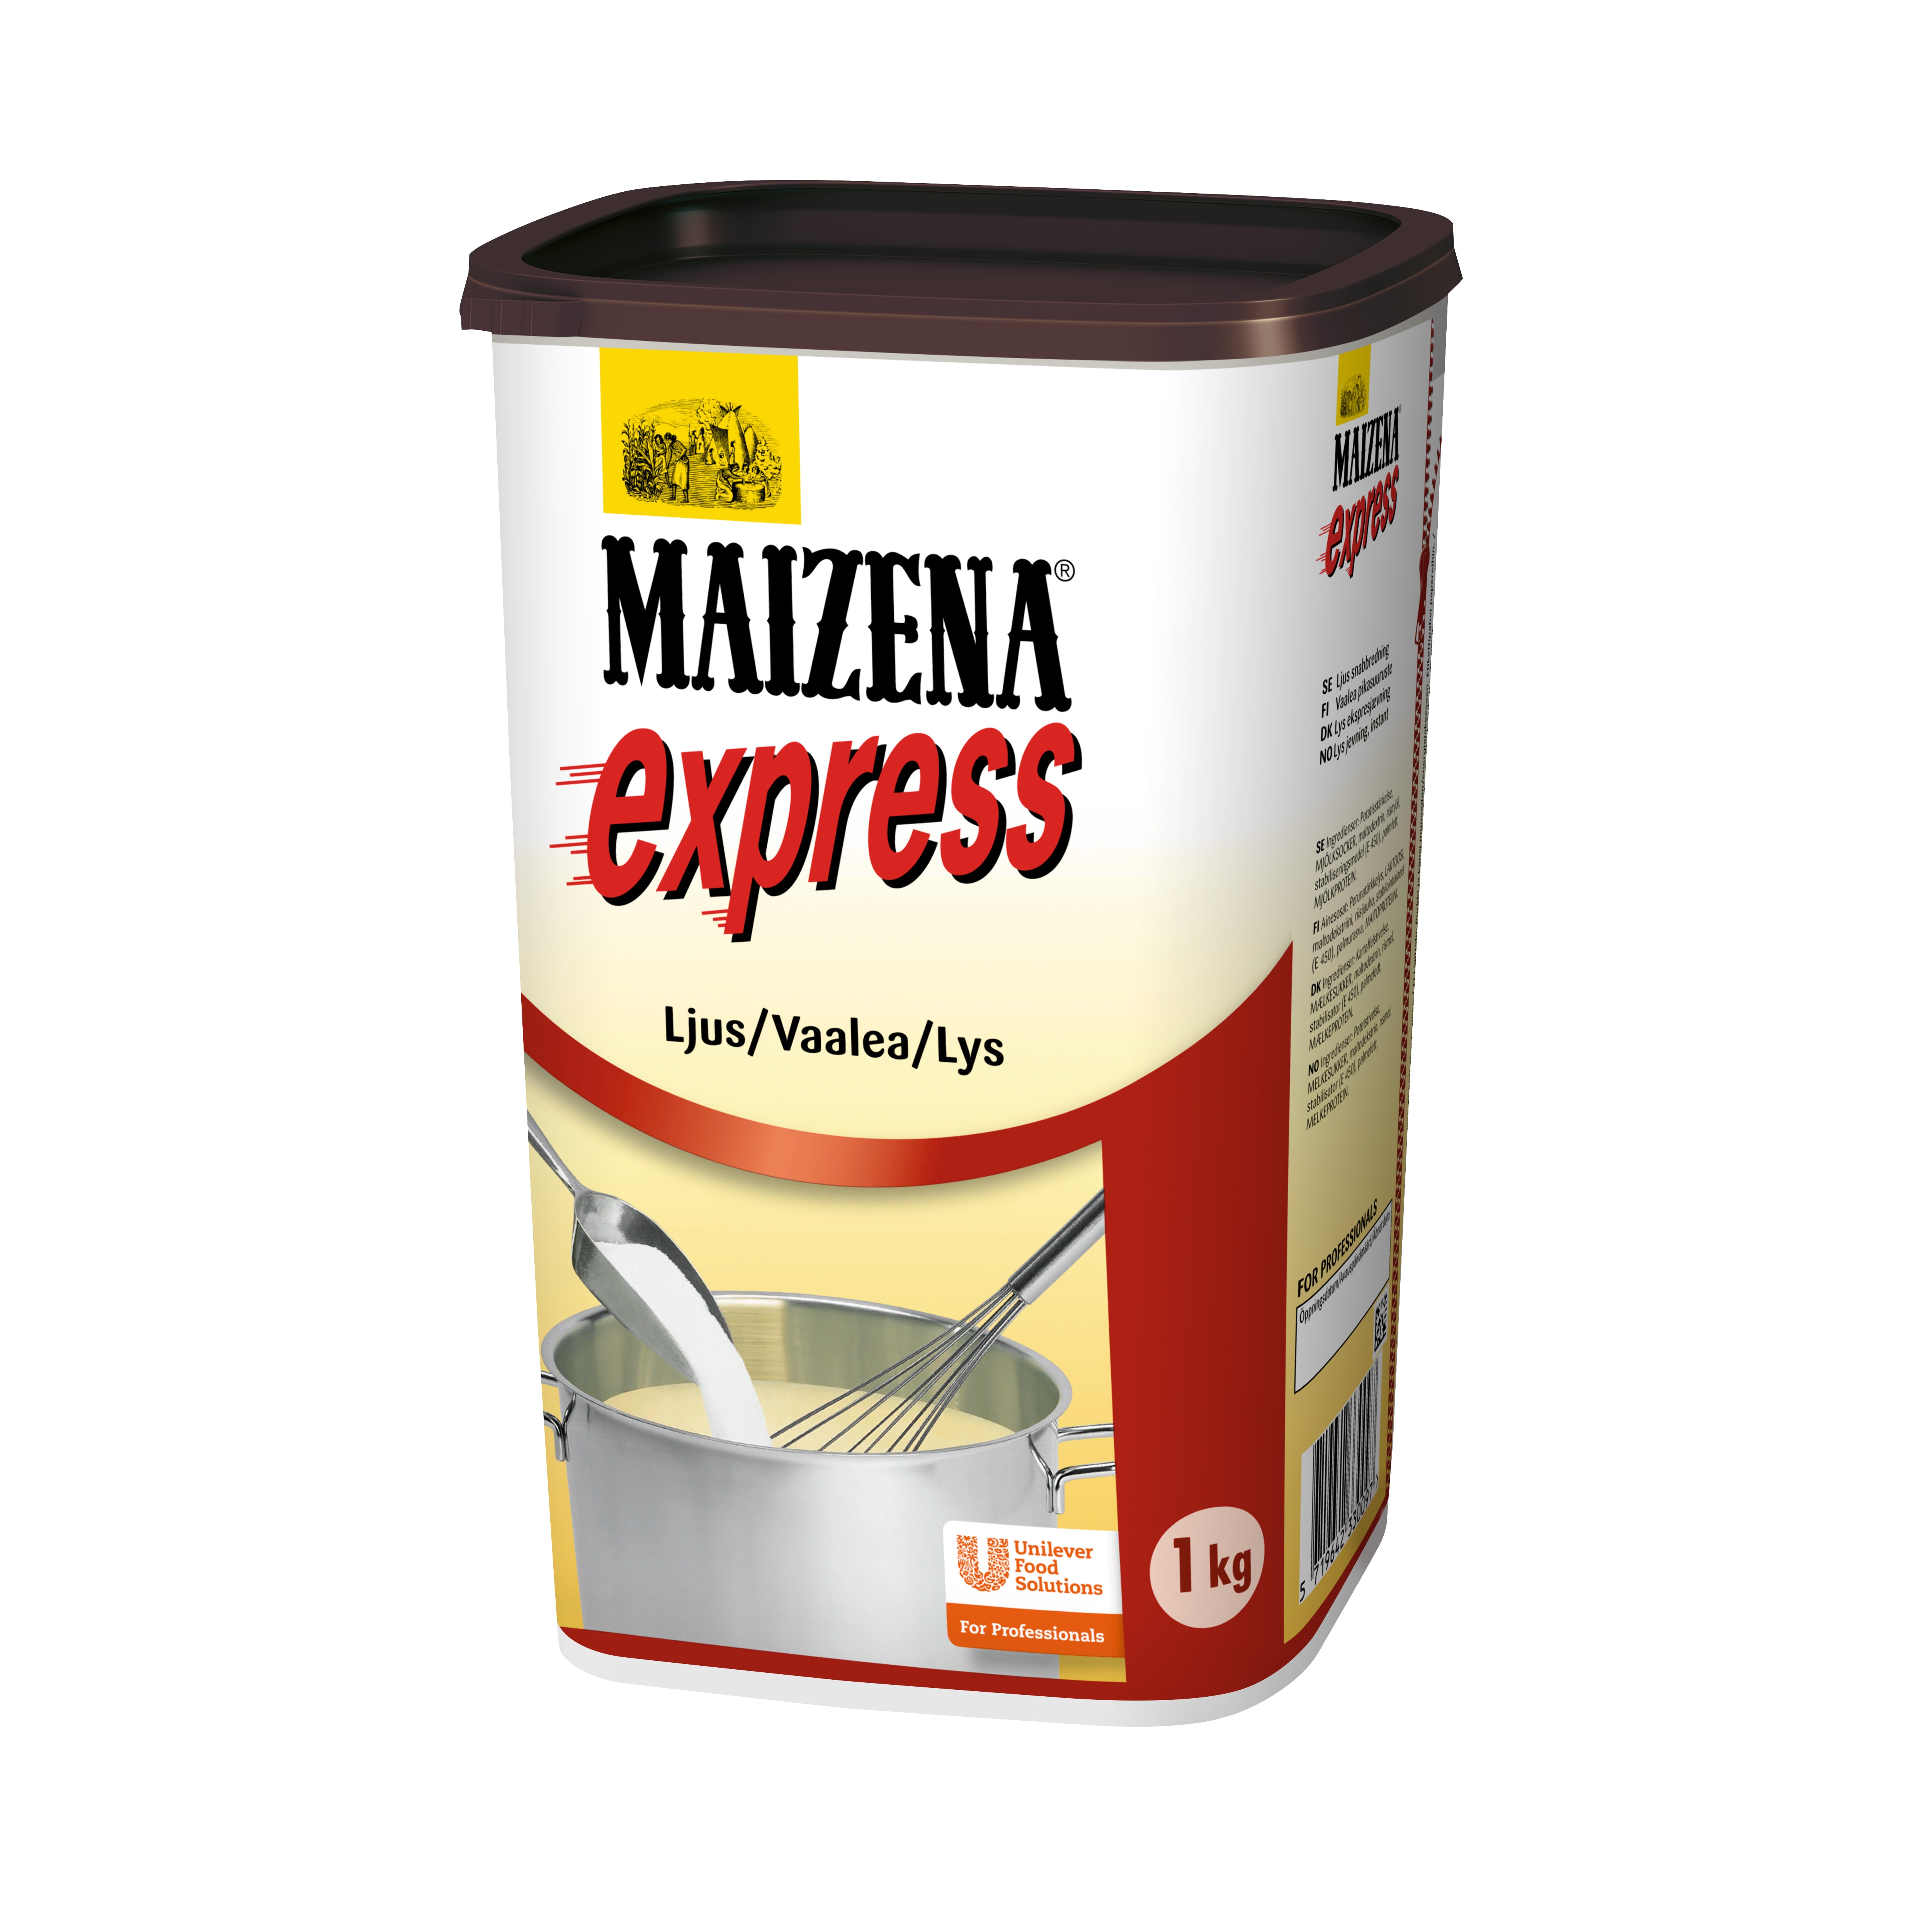 MAIZENA express, lys 1 kg - 